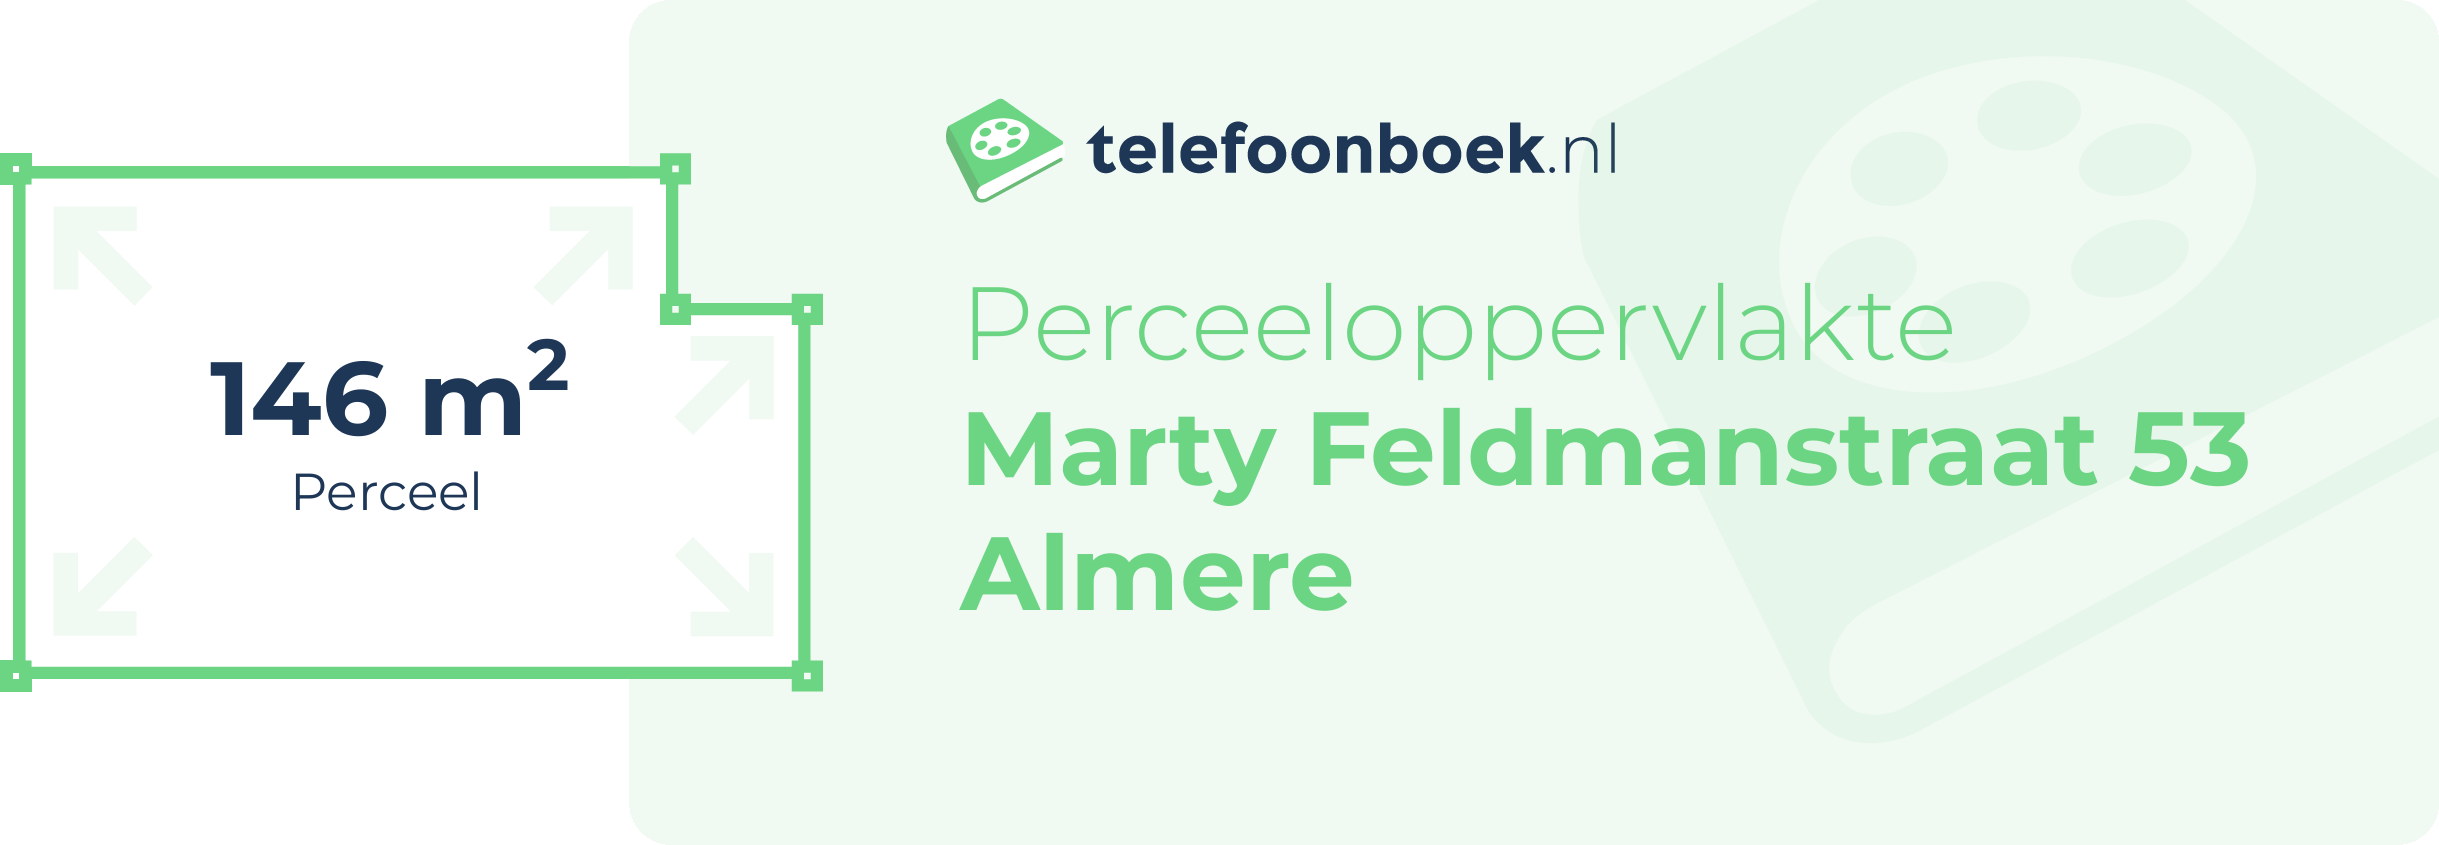 Perceeloppervlakte Marty Feldmanstraat 53 Almere